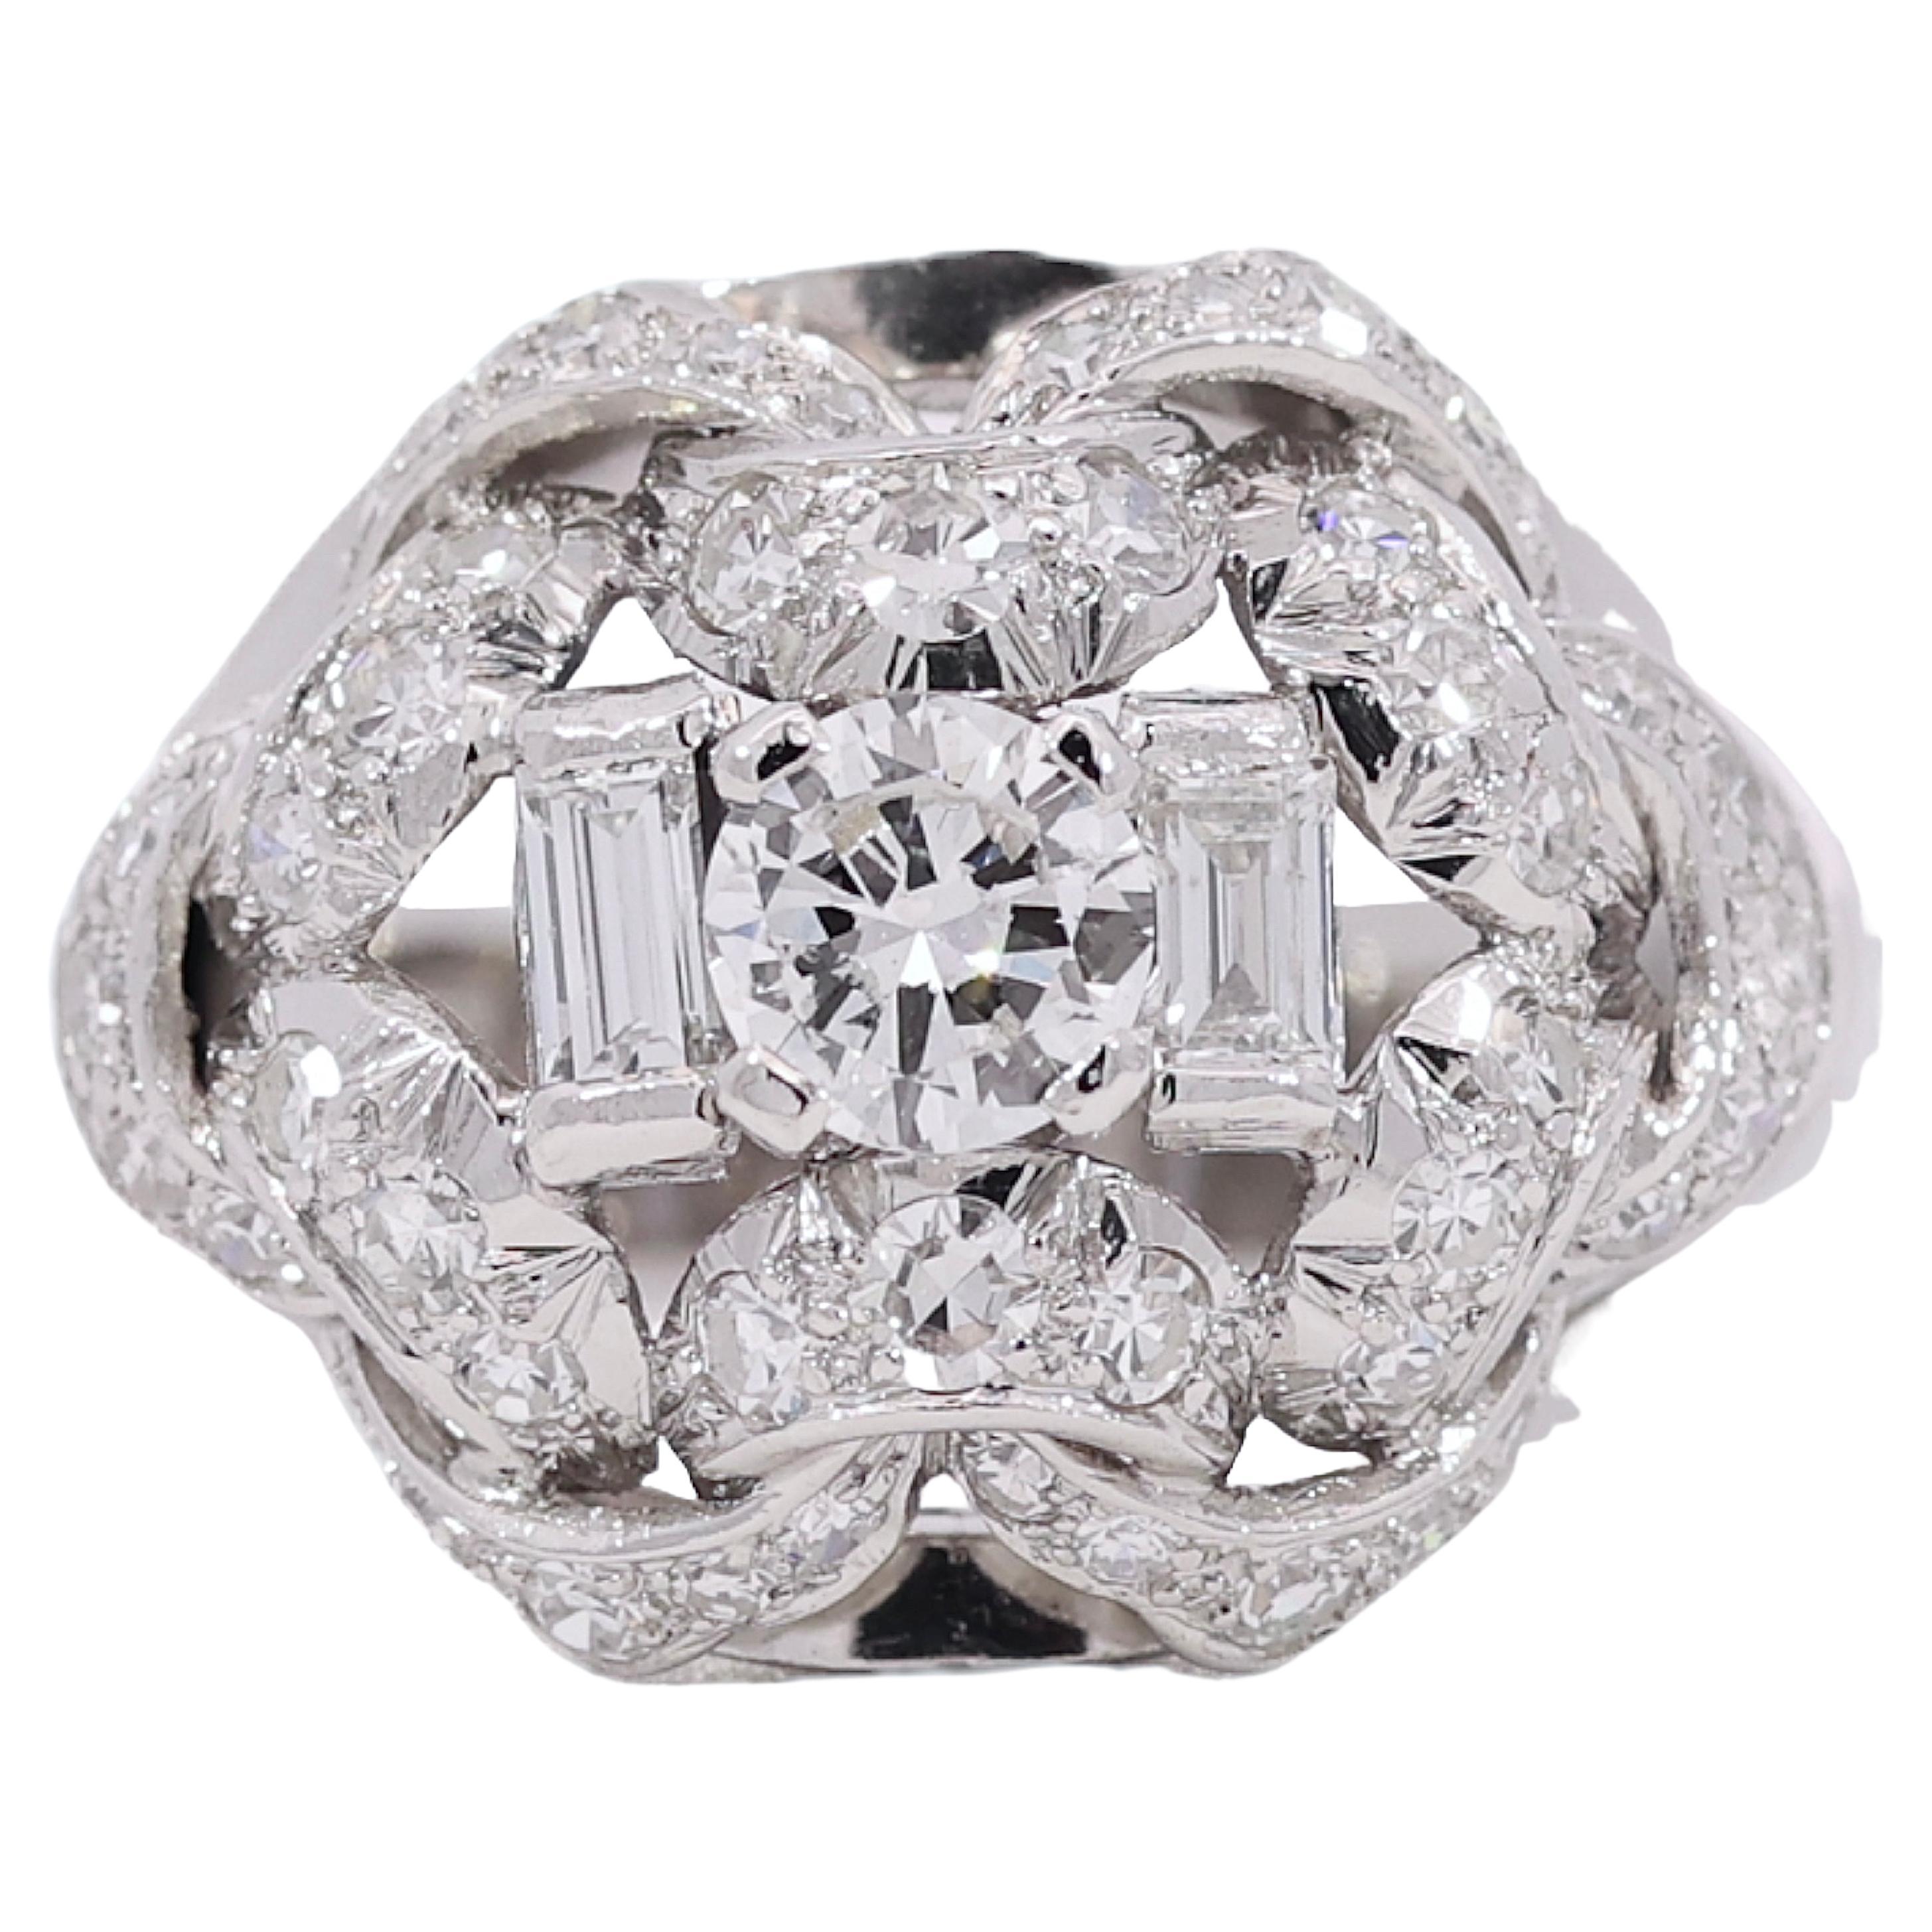 Gorgeous Art Deco Platinum Ring with Approx. 1.54 Carat Diamonds